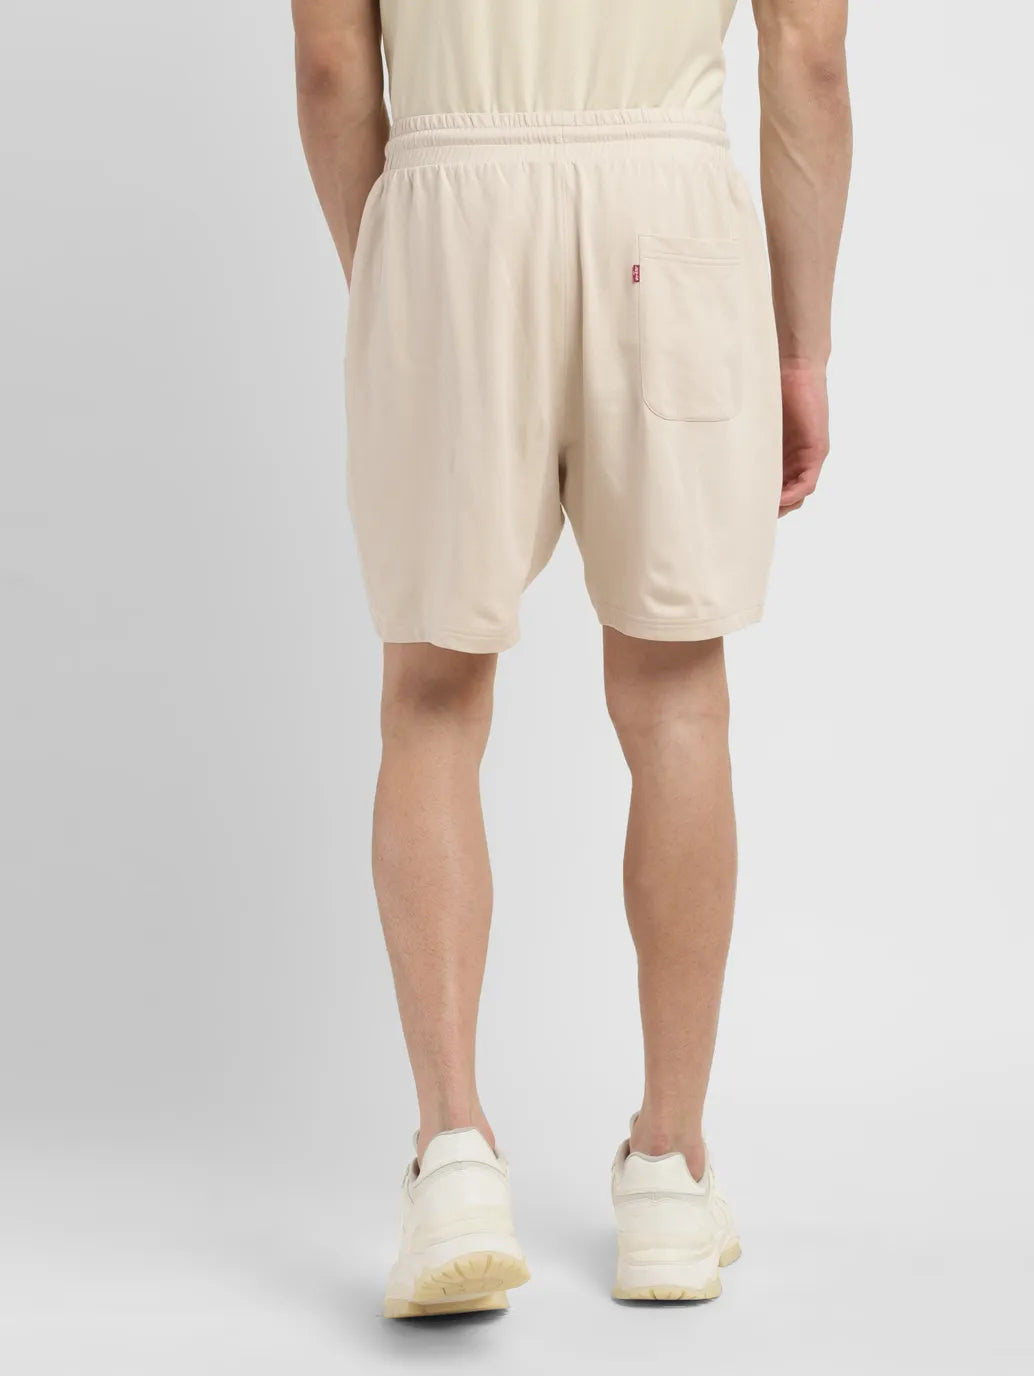 Beige Plain B Slim Seamless Shaping Shorts, 1 at Rs 750/piece in Ernakulam